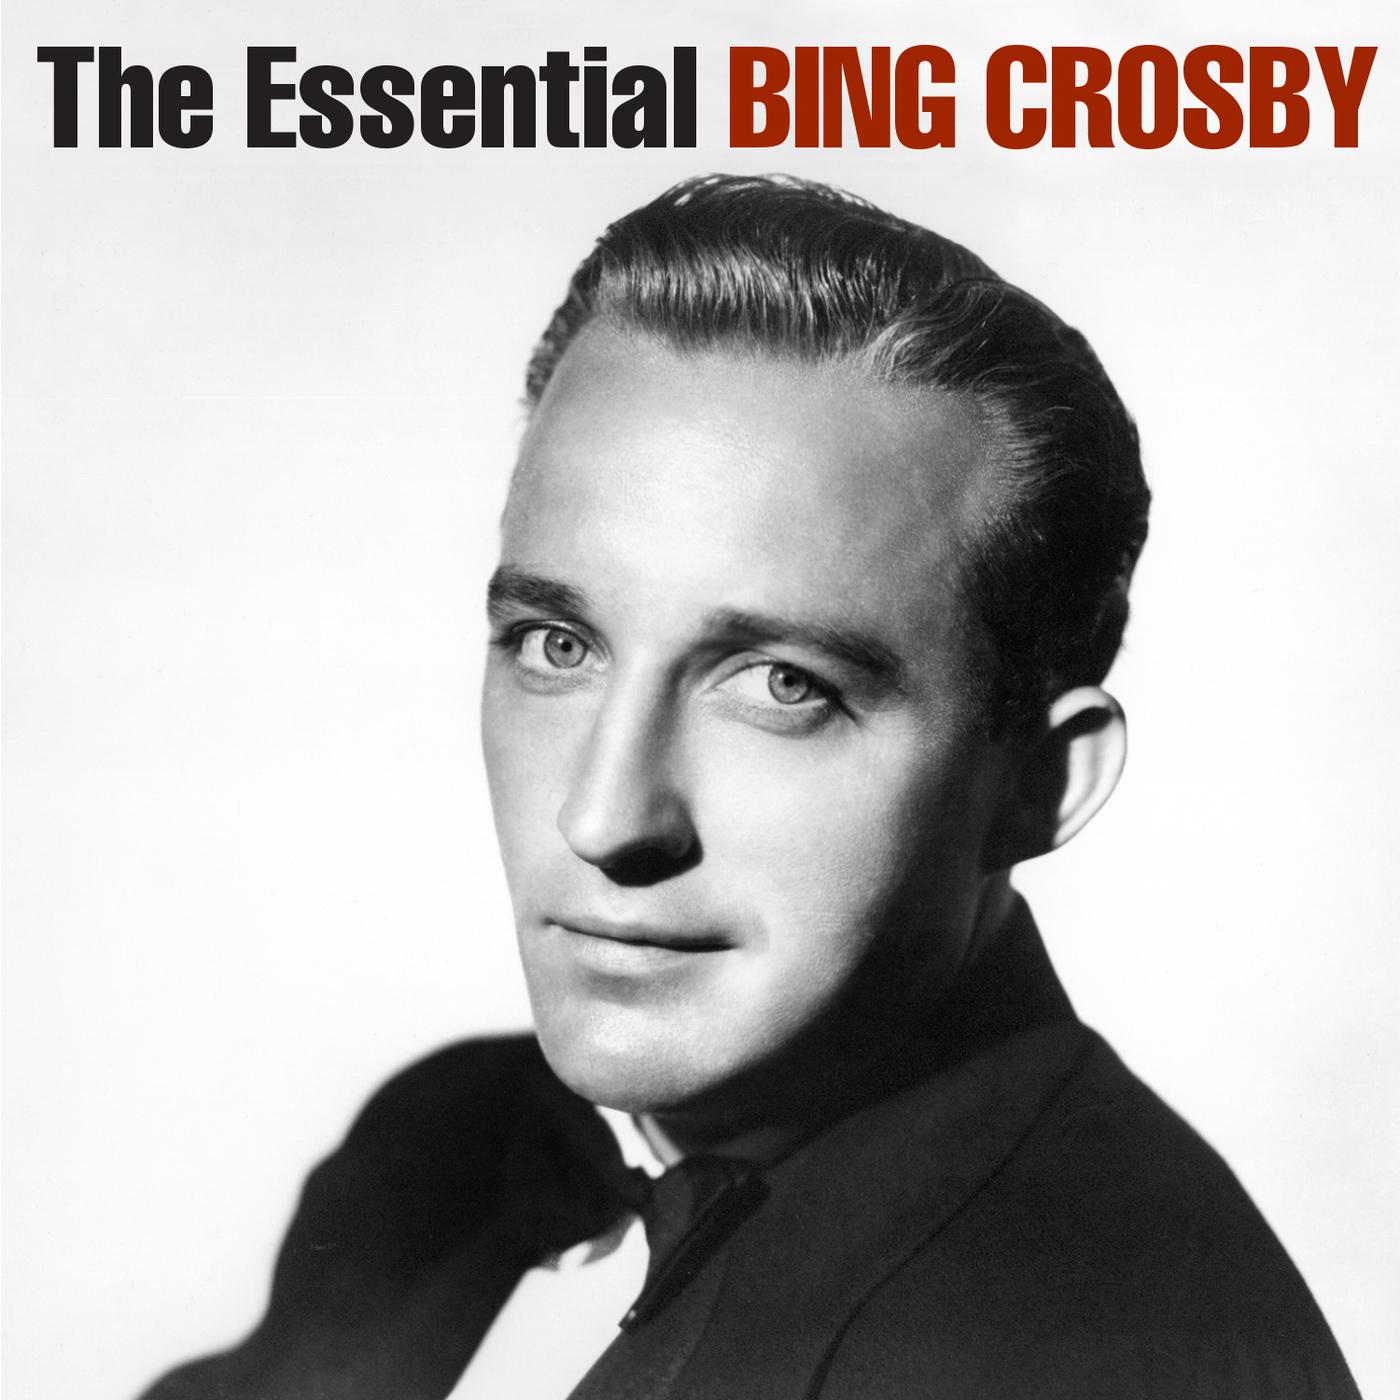 The Essential Bing Crosby